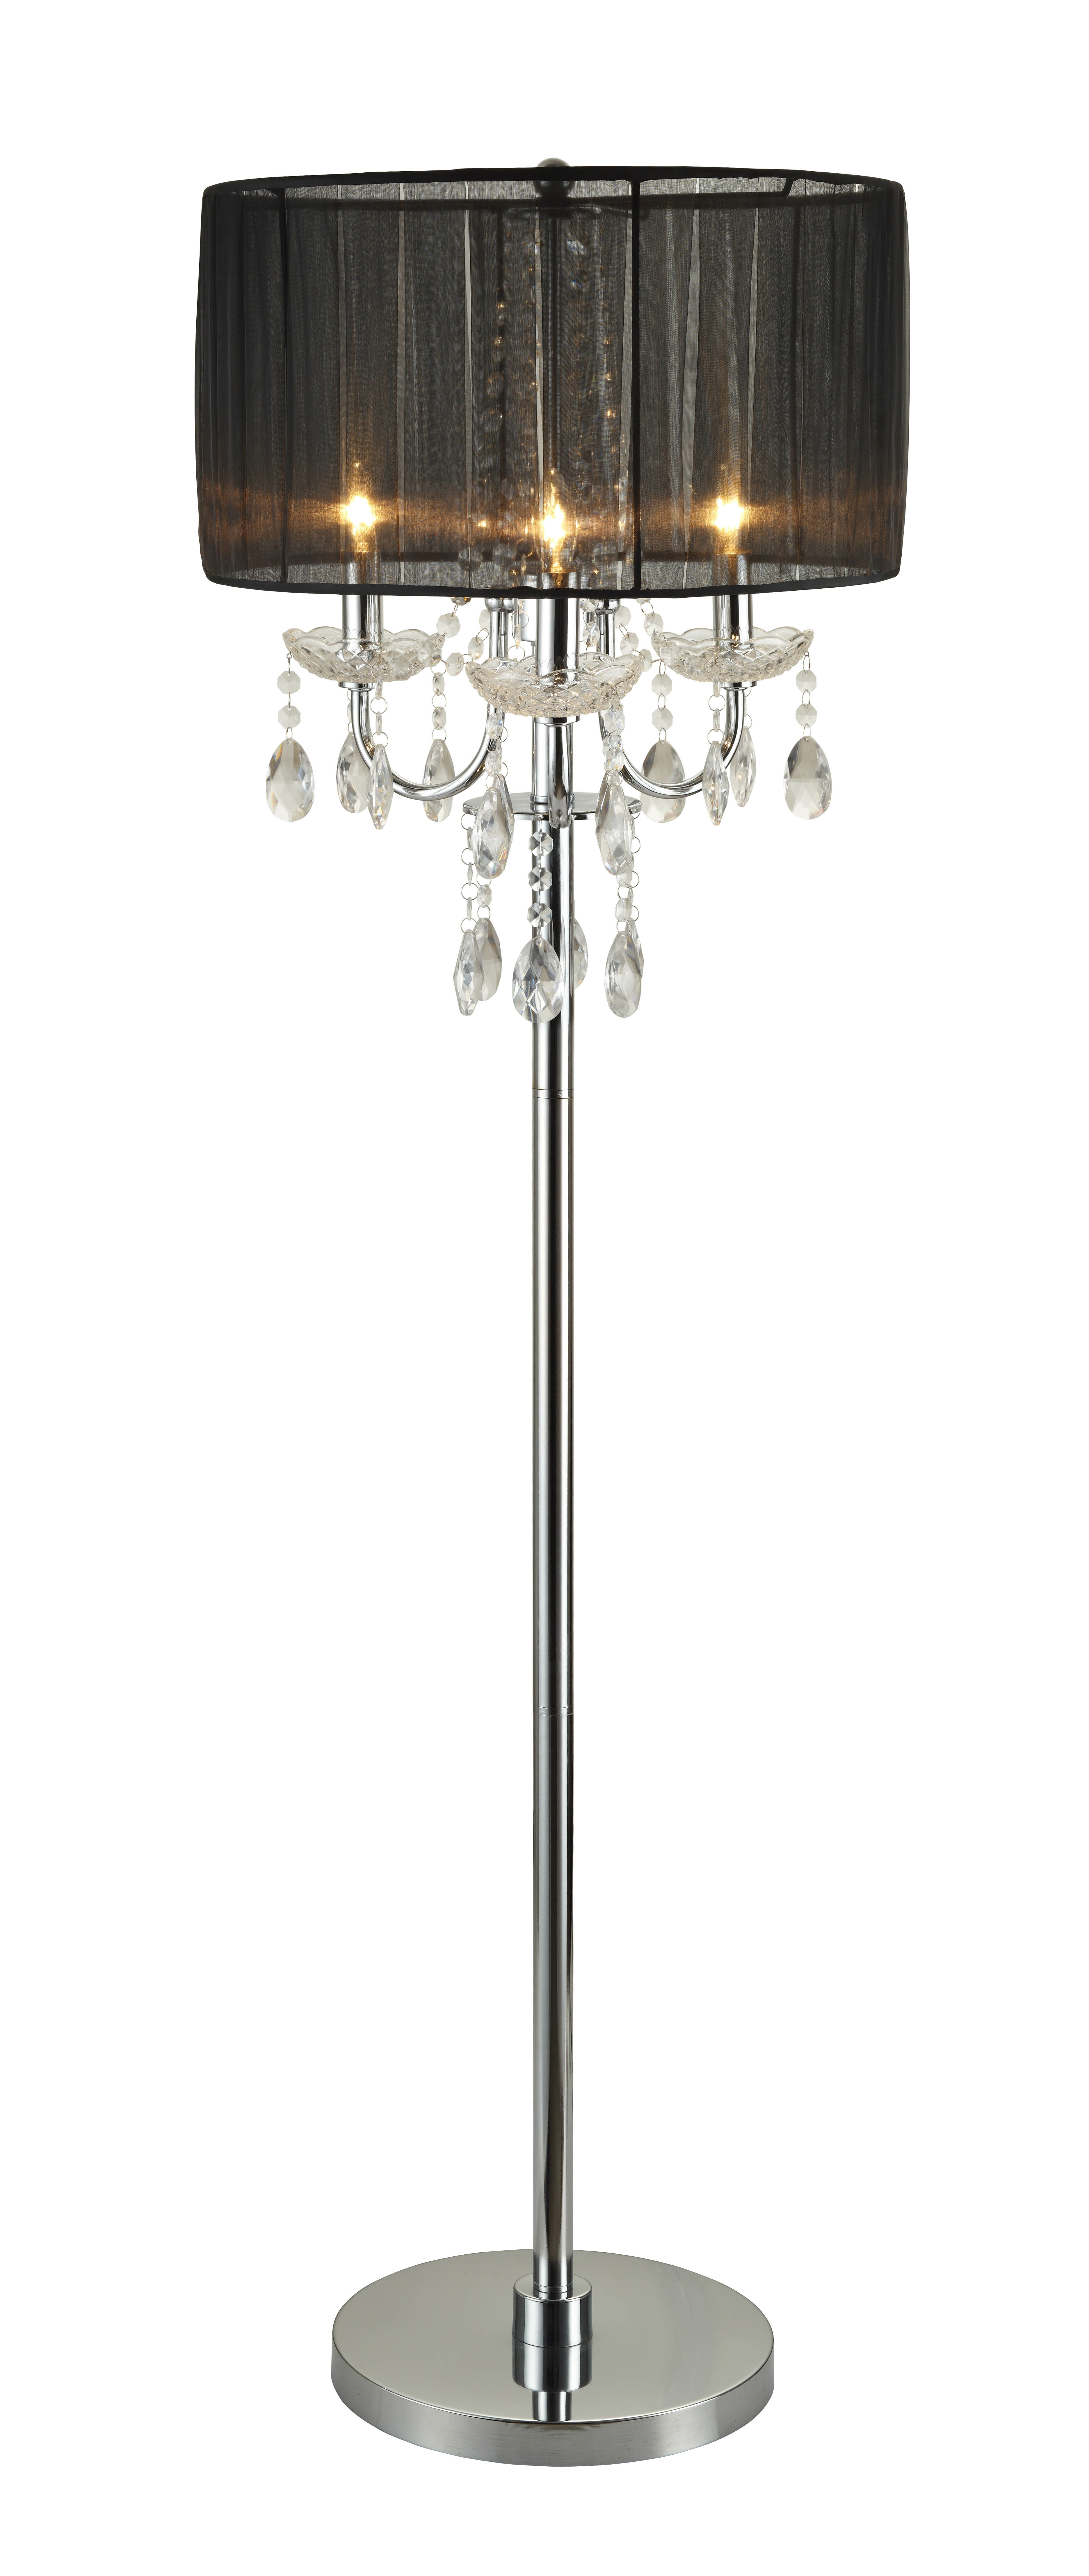 Villard Chandelier 62 Candelabra Floor Lamp with regard to size 3744 X 8858